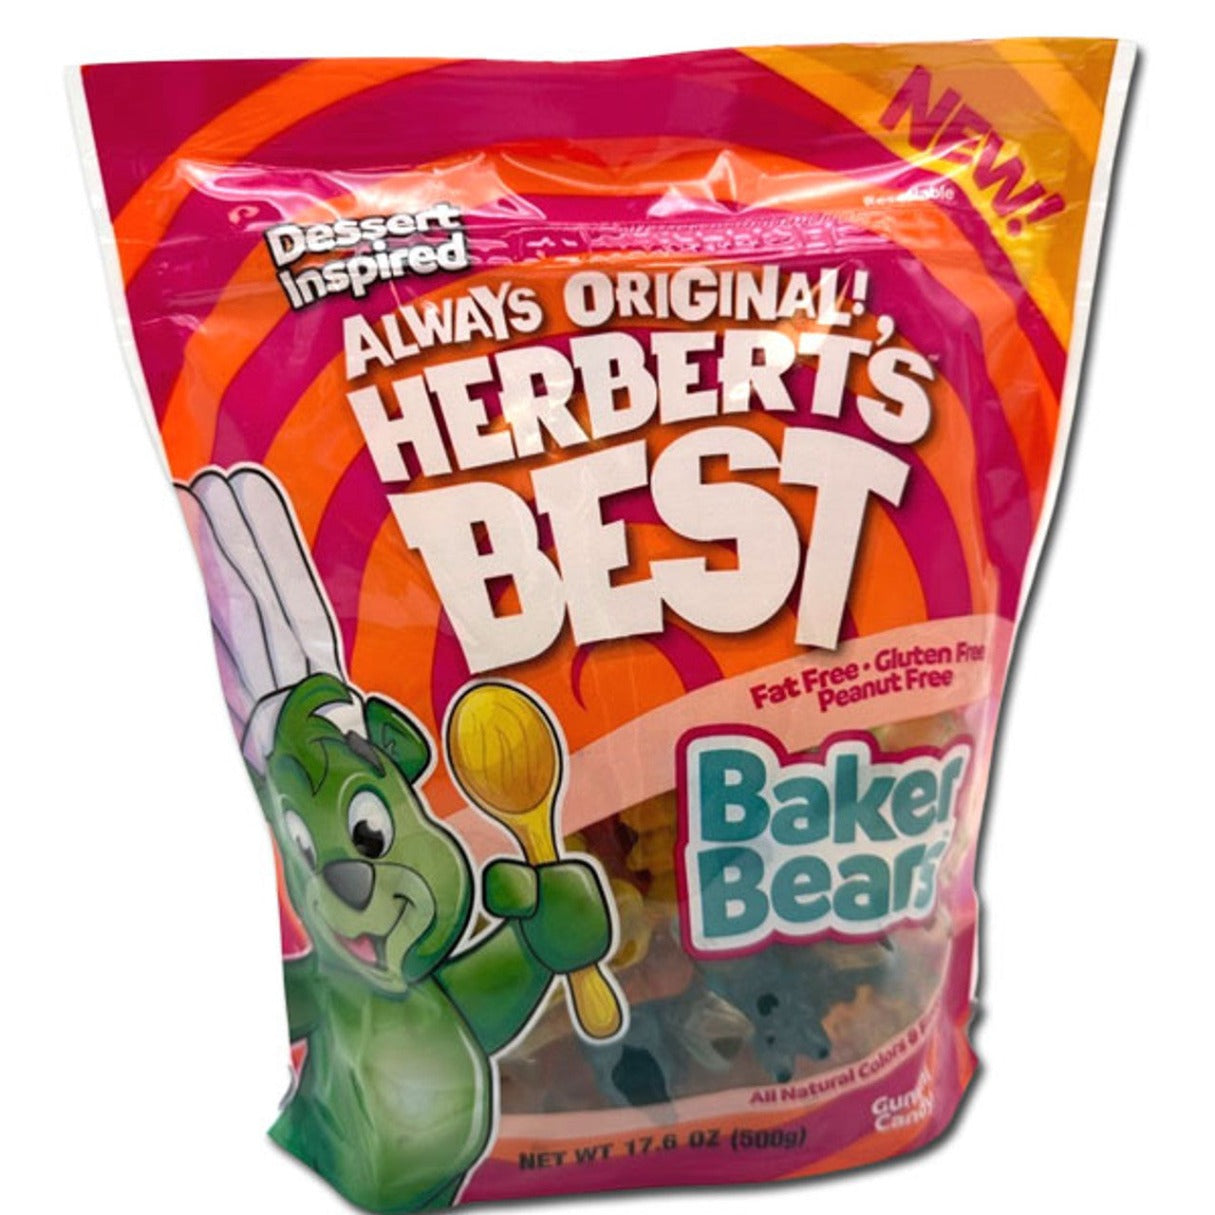 Efrutti Herbert's Best Baker Bears  17.6oz - 12ct